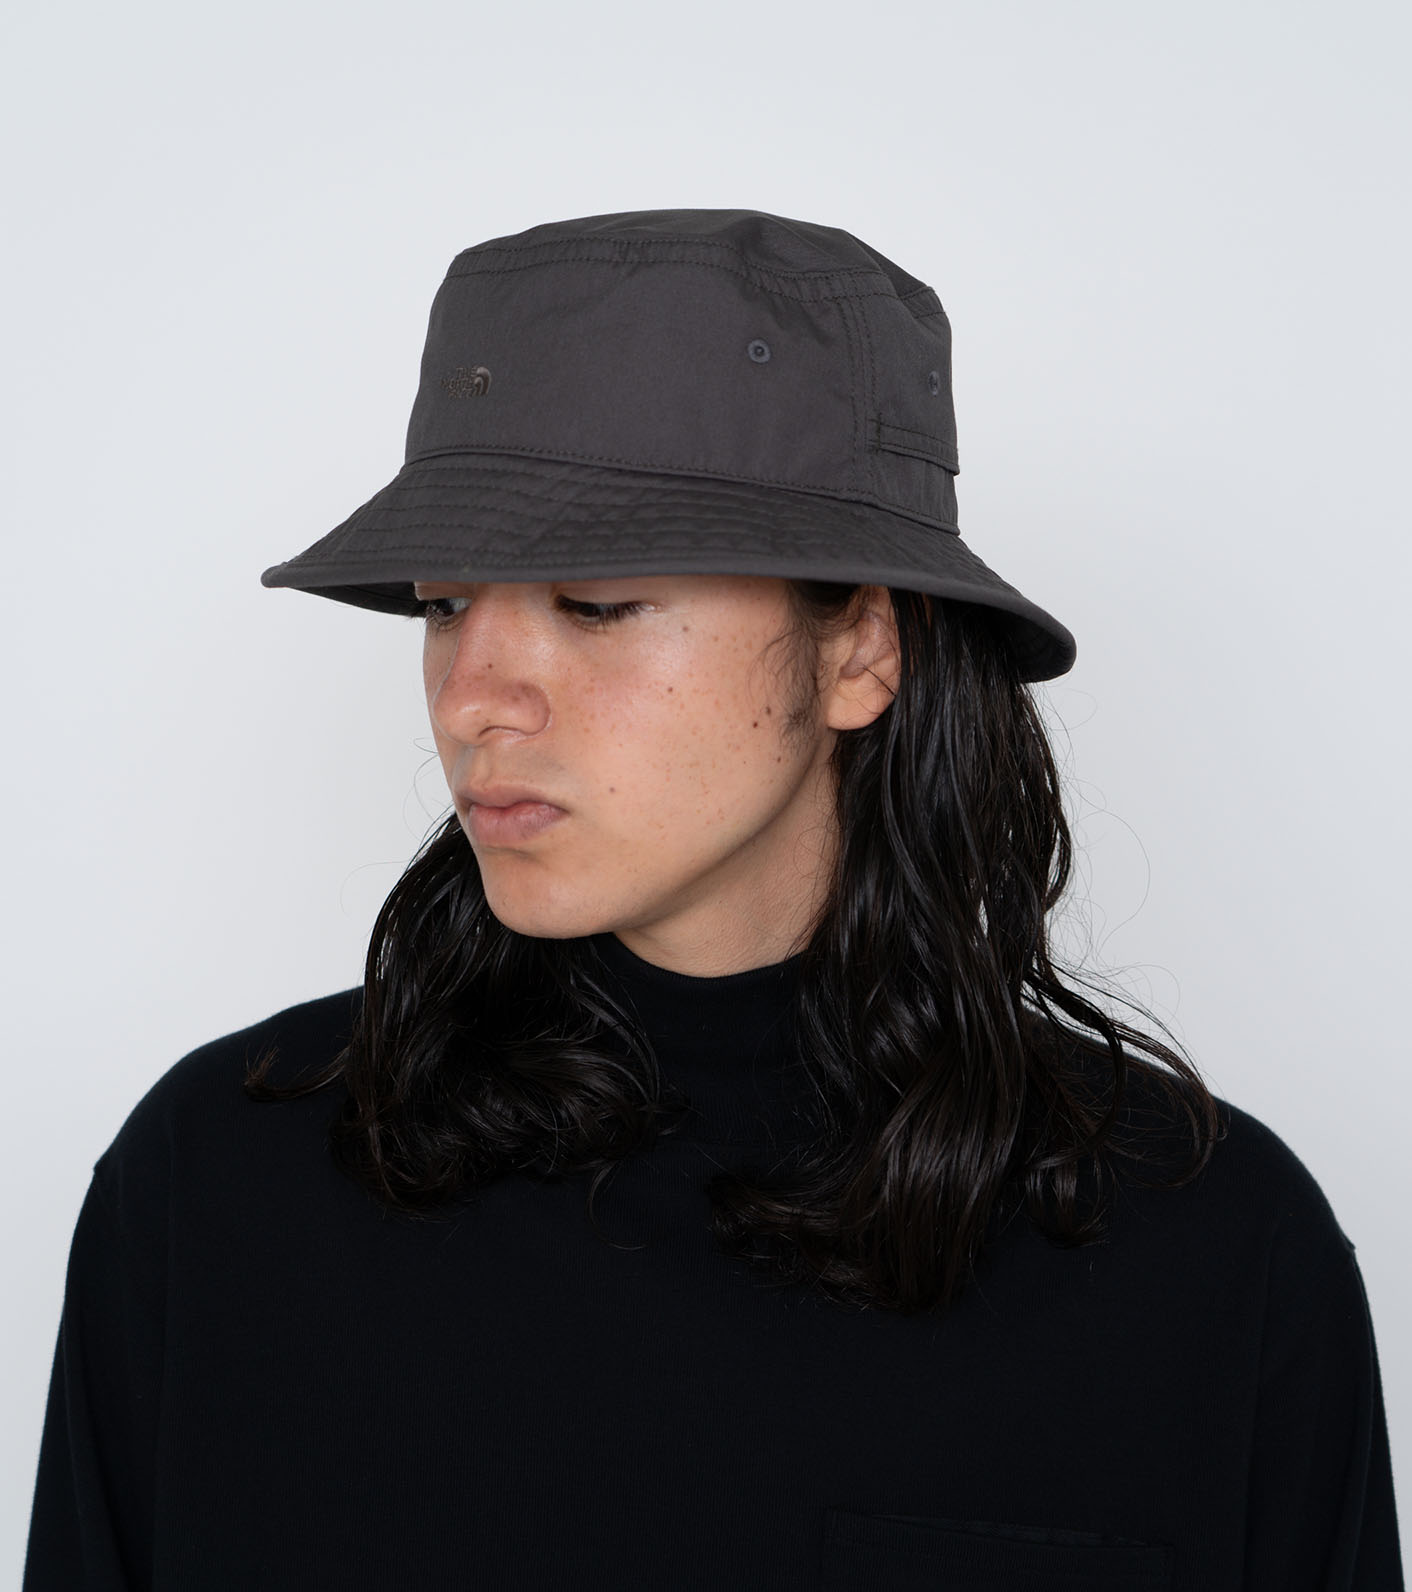 nanamica / 65/35 Field Hat